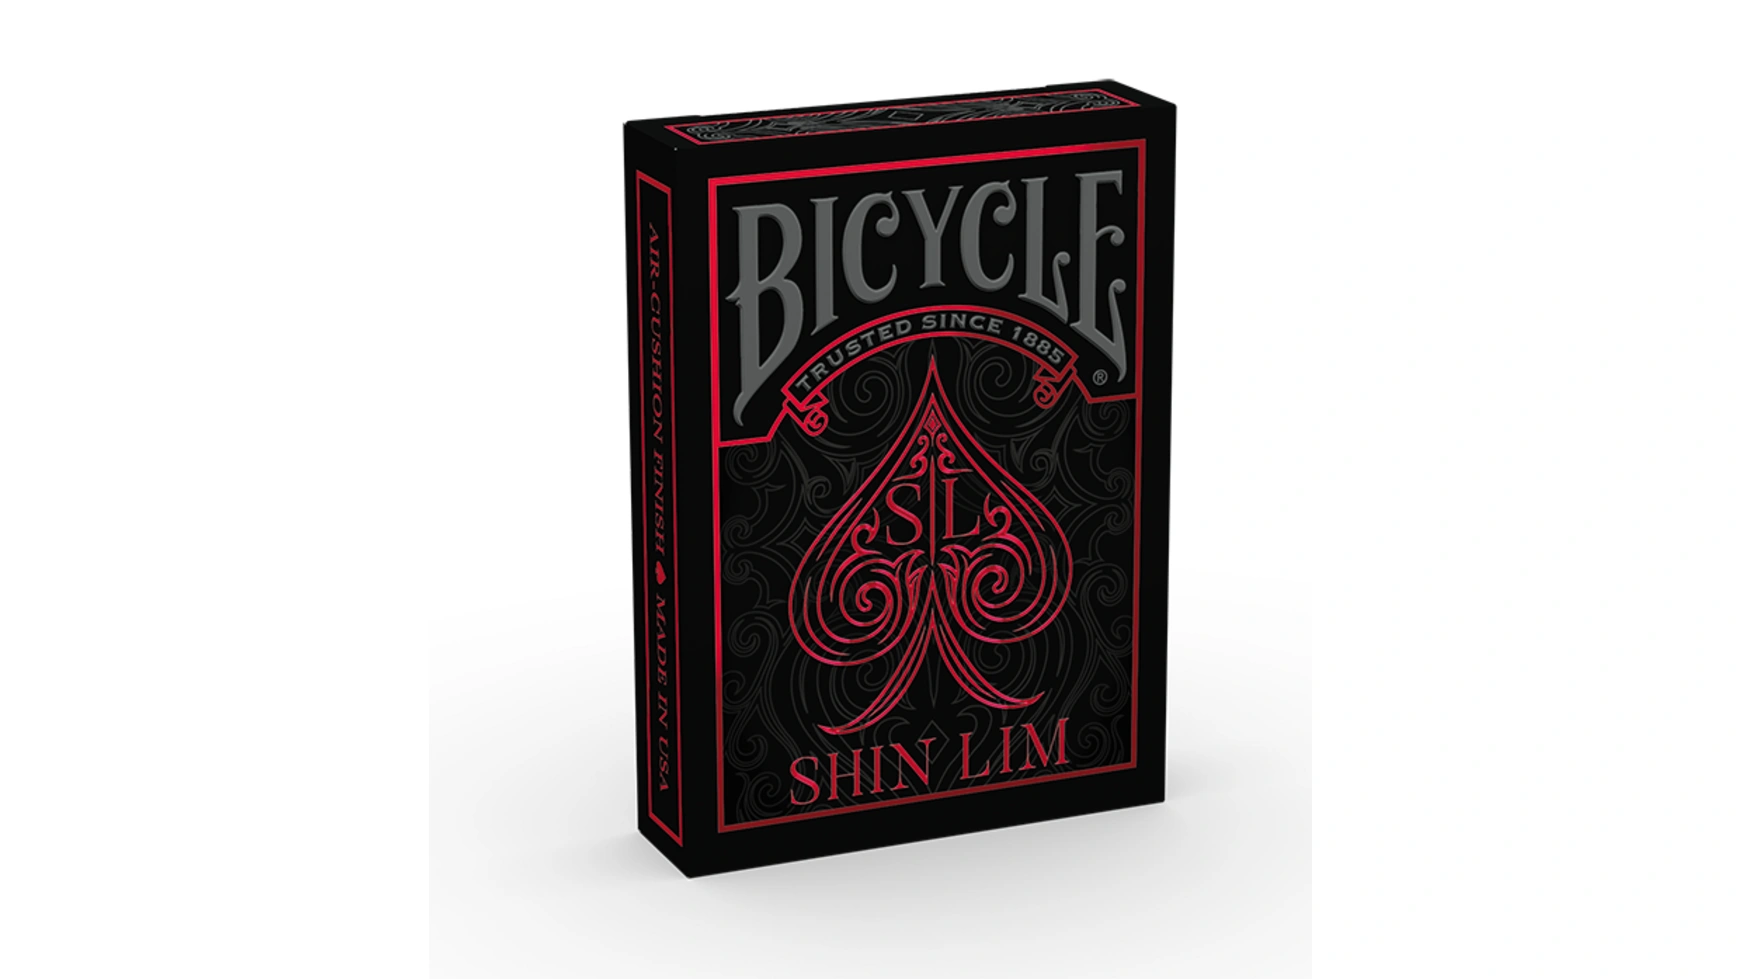 Bicycle Шин Лим